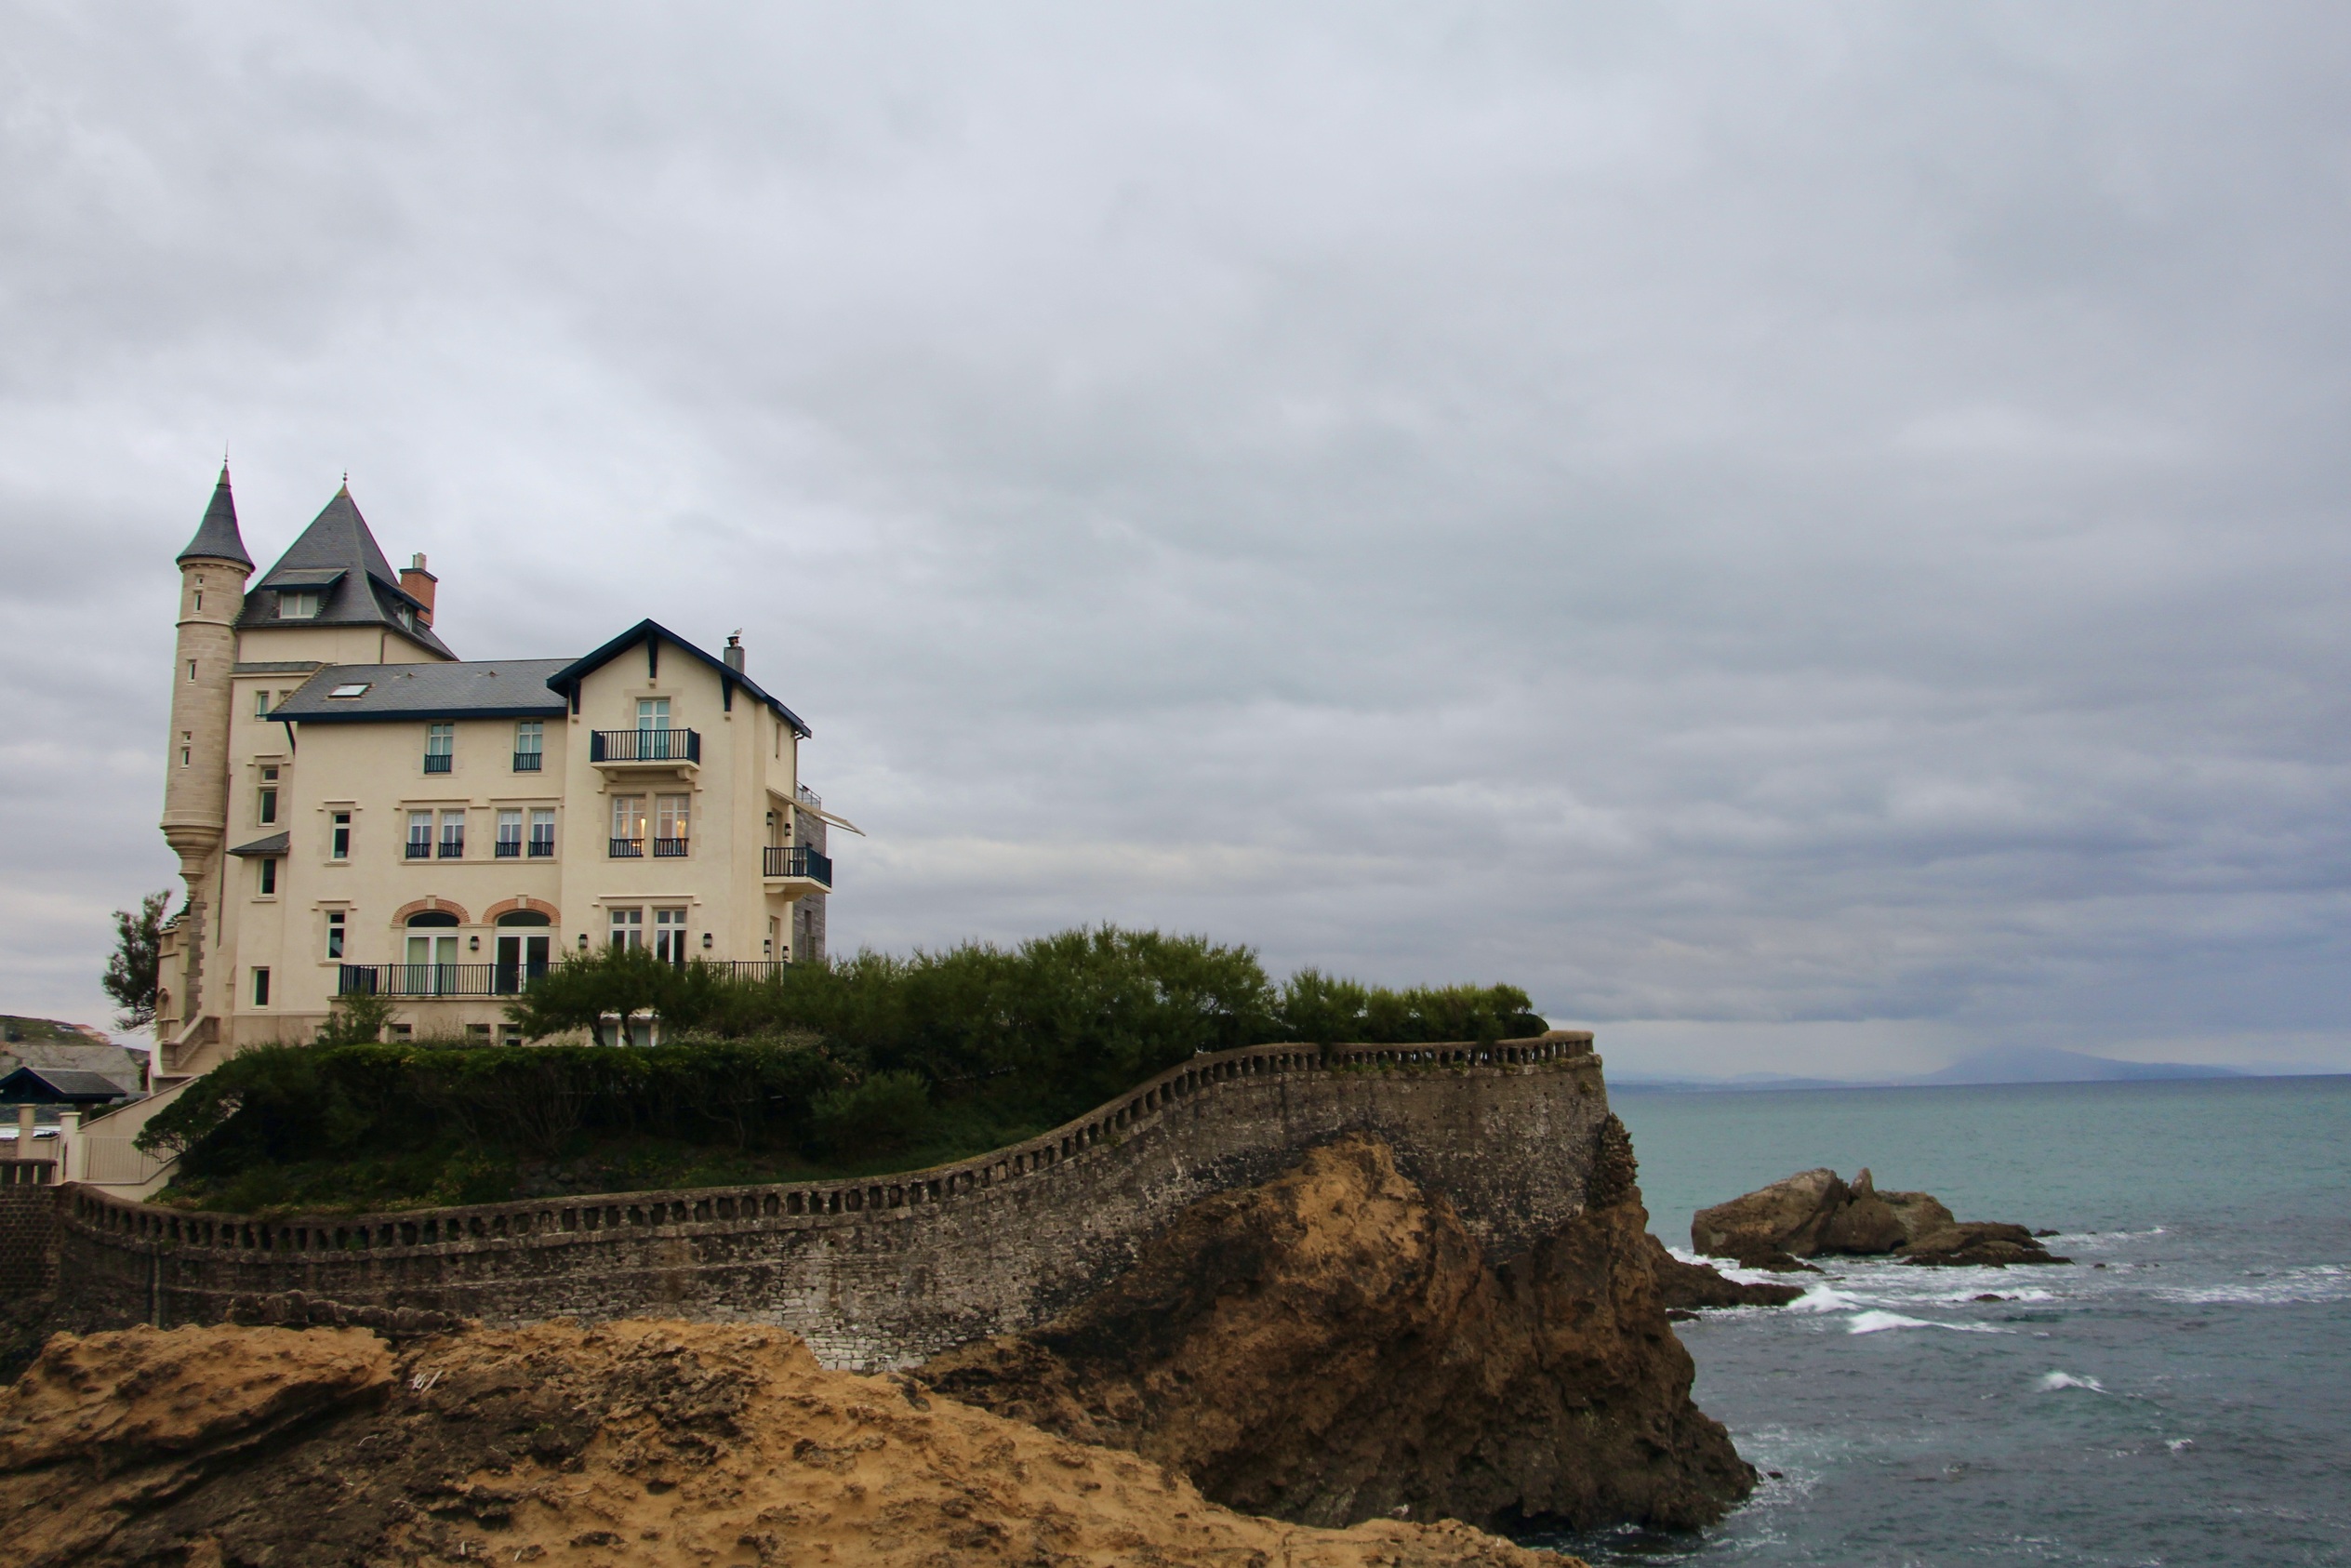 The Villa Belza in Biarritz, France.